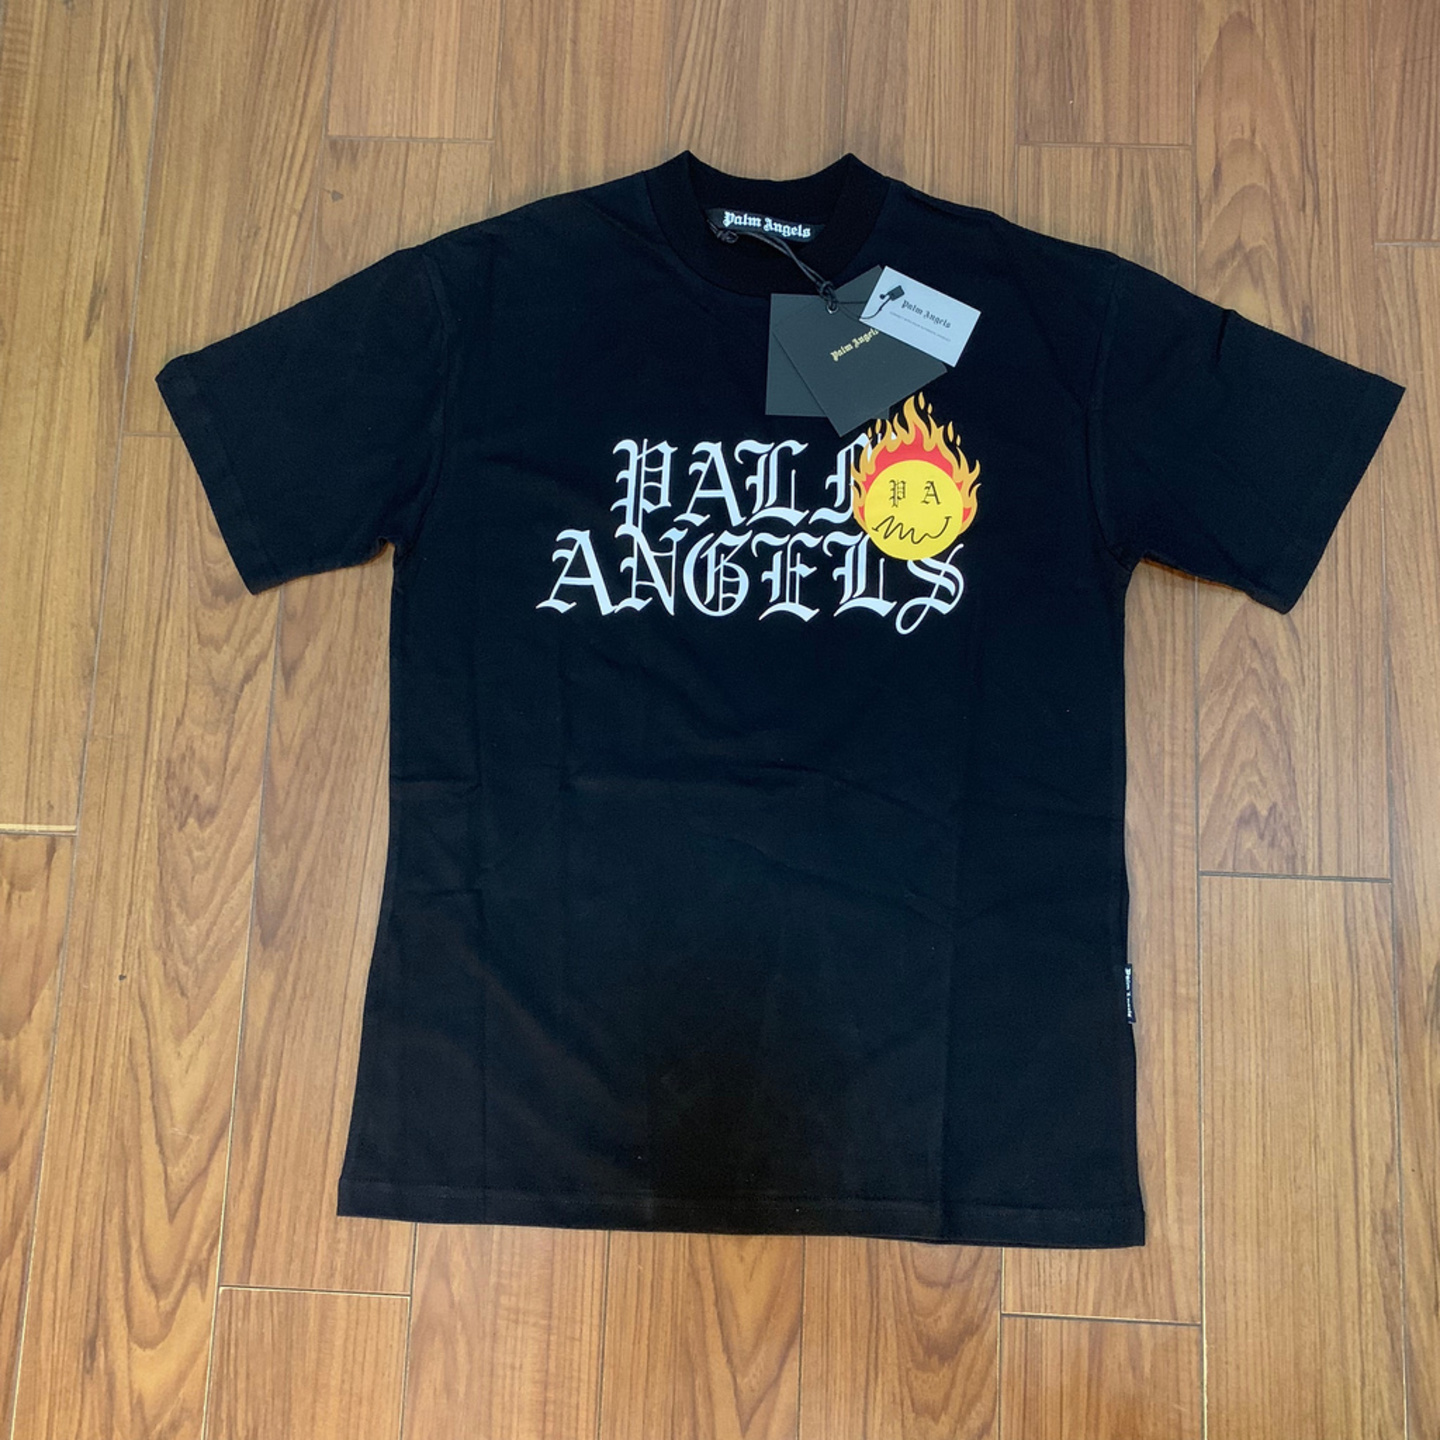 Palm Angels Burning Head S/S T-Shirt